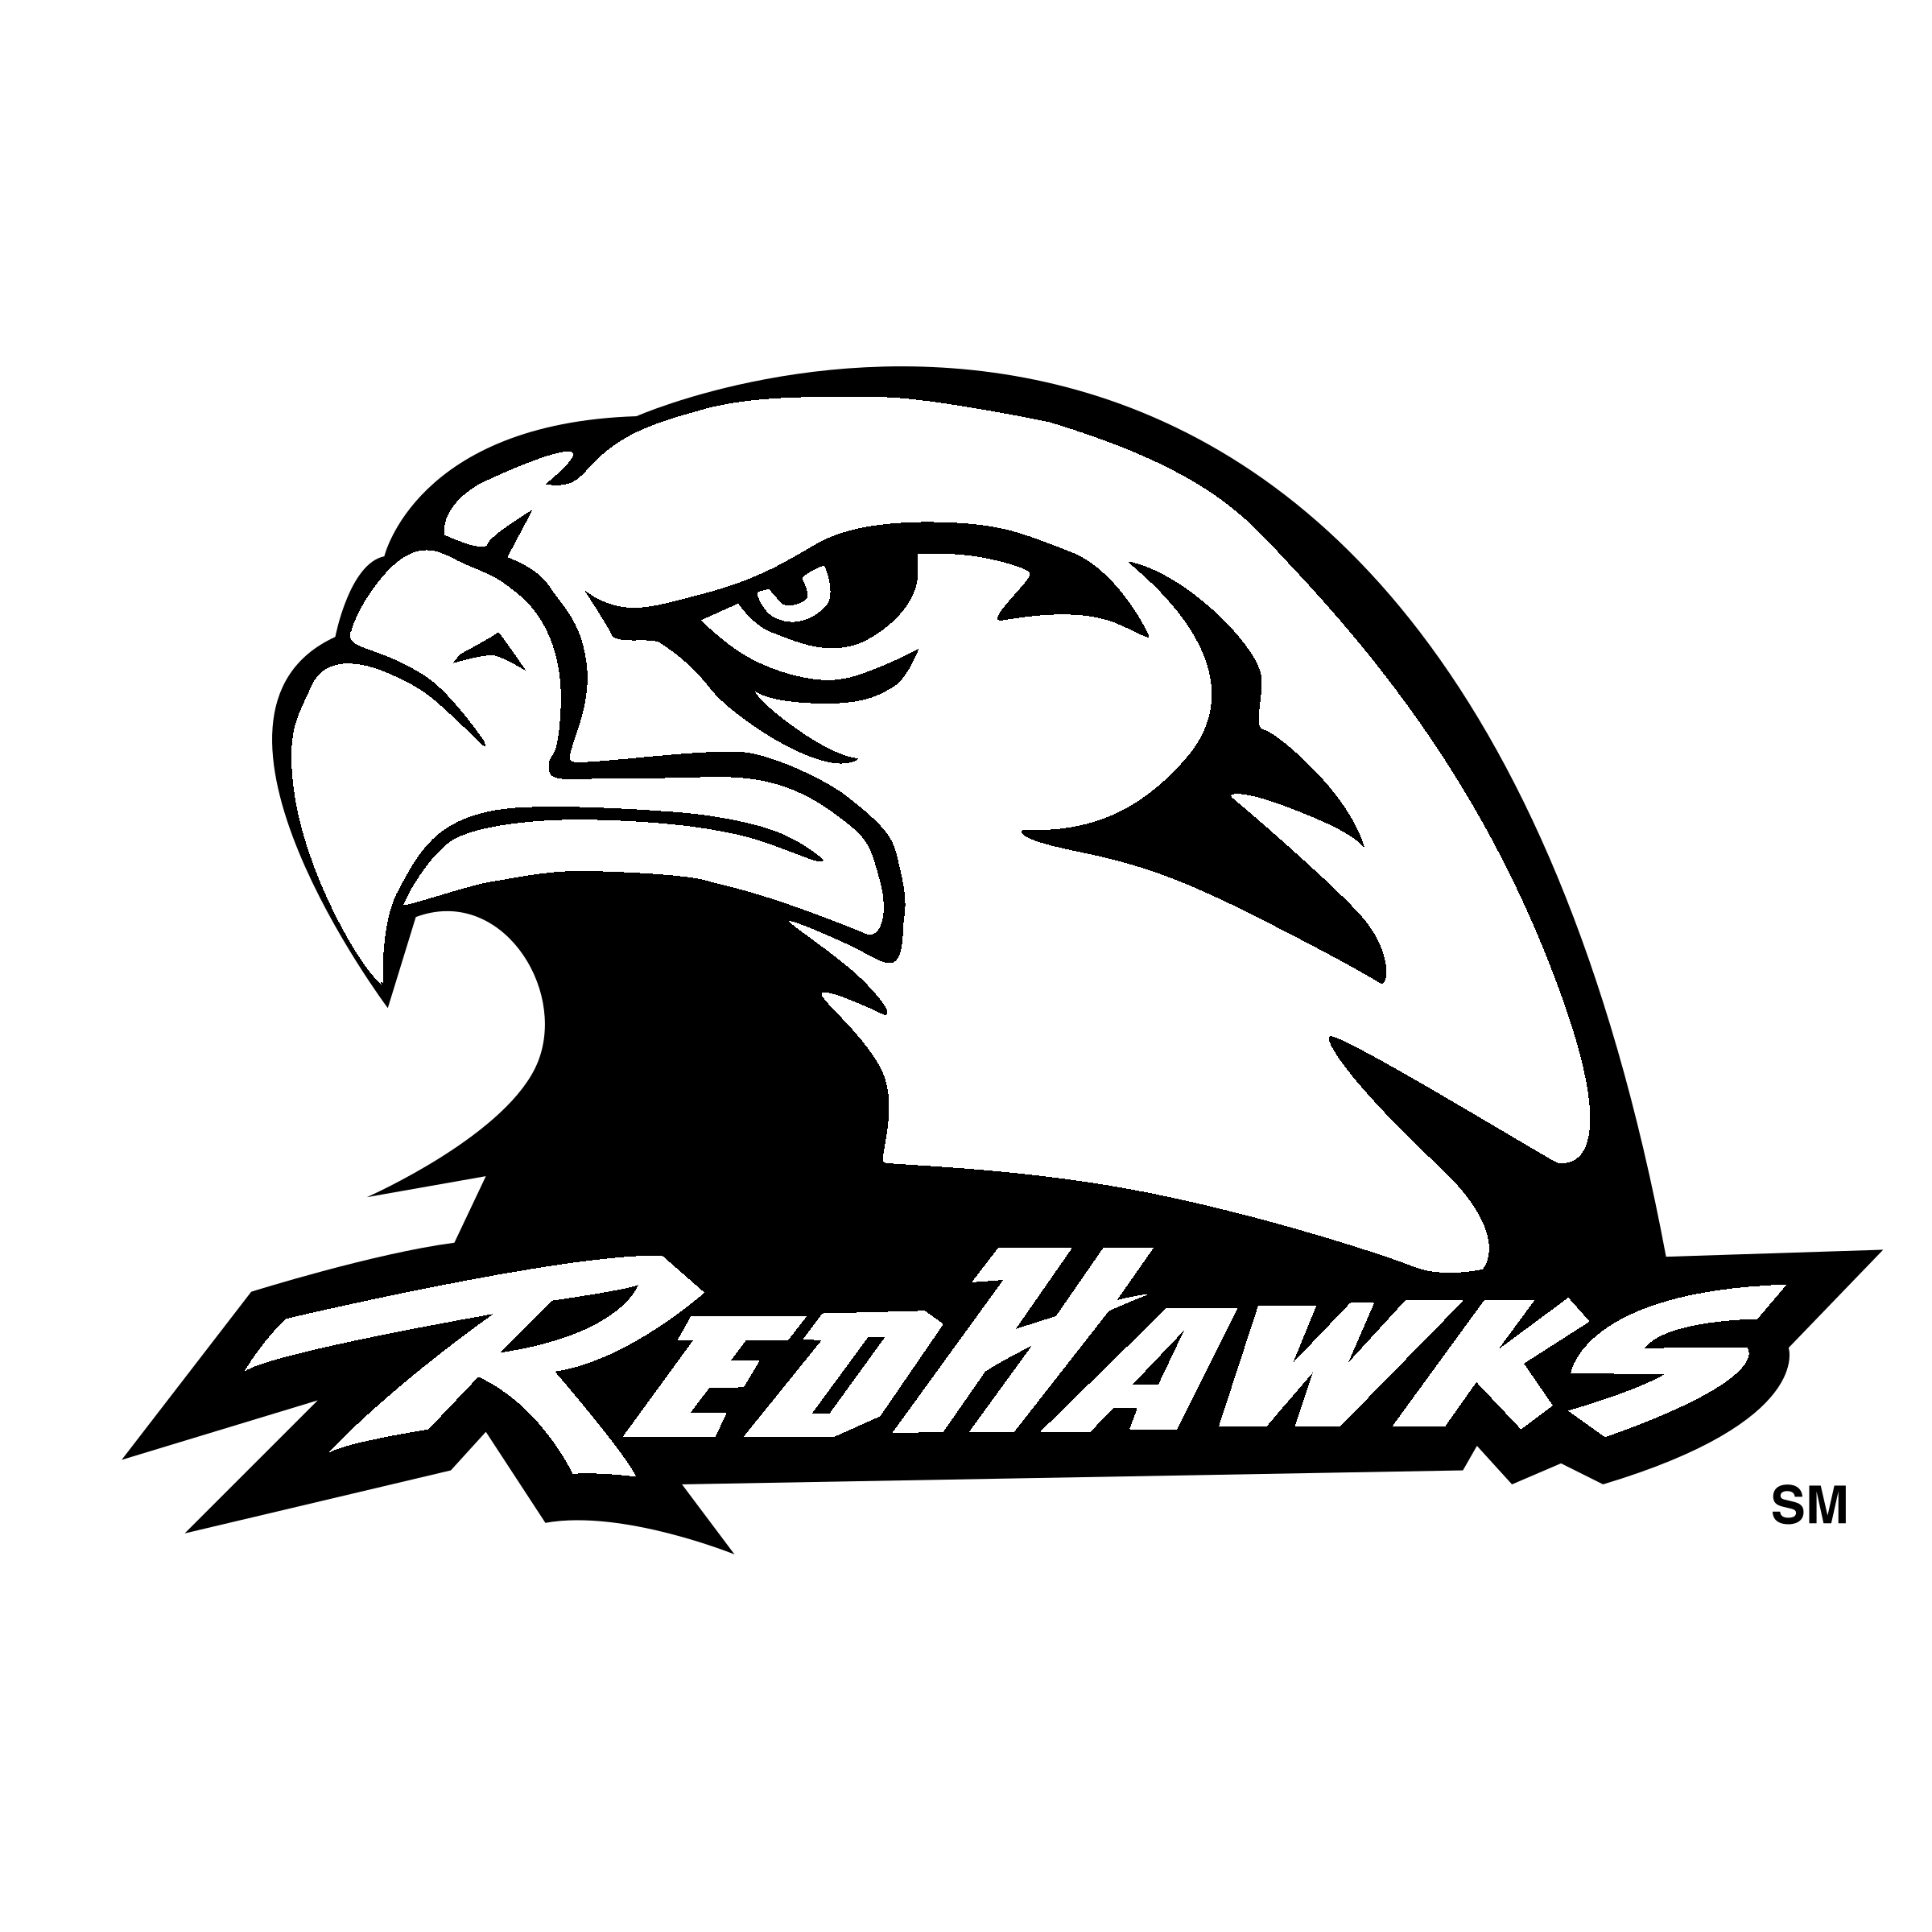 RedHawks Logo - Miami Redhawks Logo PNG Transparent & SVG Vector - Freebie Supply